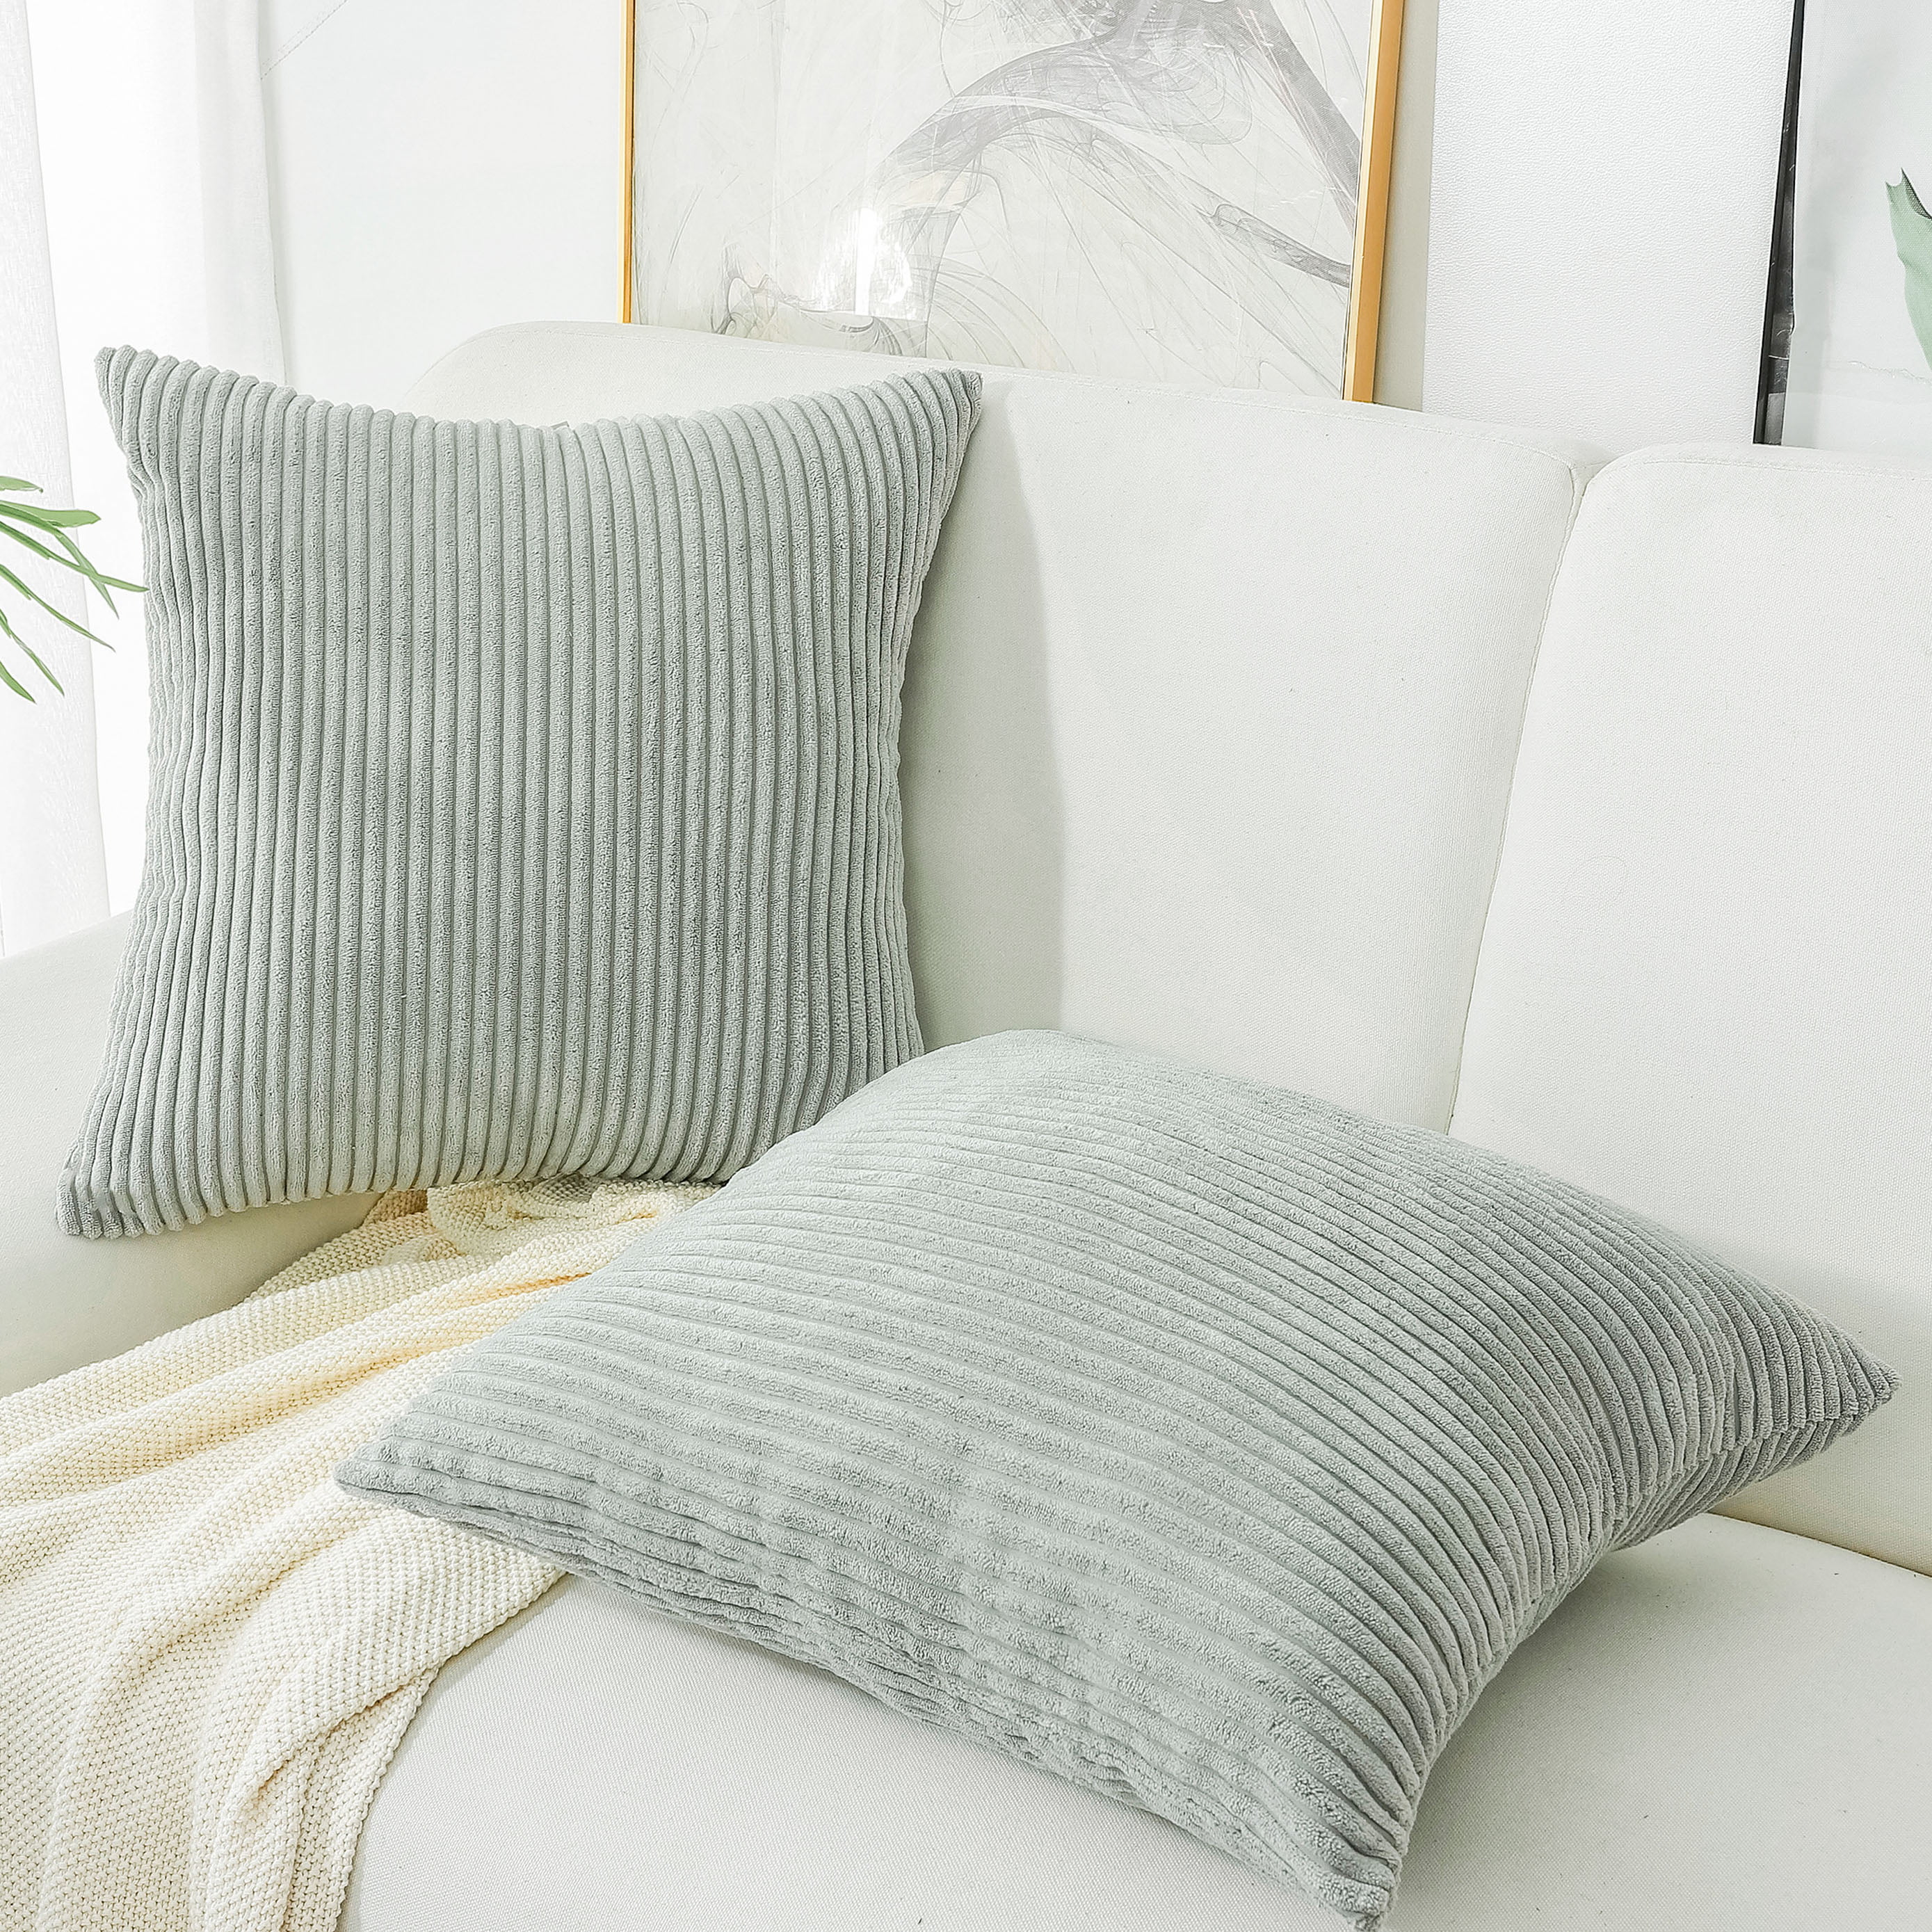 PiccoCasa 2Pcs Soft Corduroy Throw Pillow Covers, 20 x 20 Inch Striped Decorative Cushion Covers